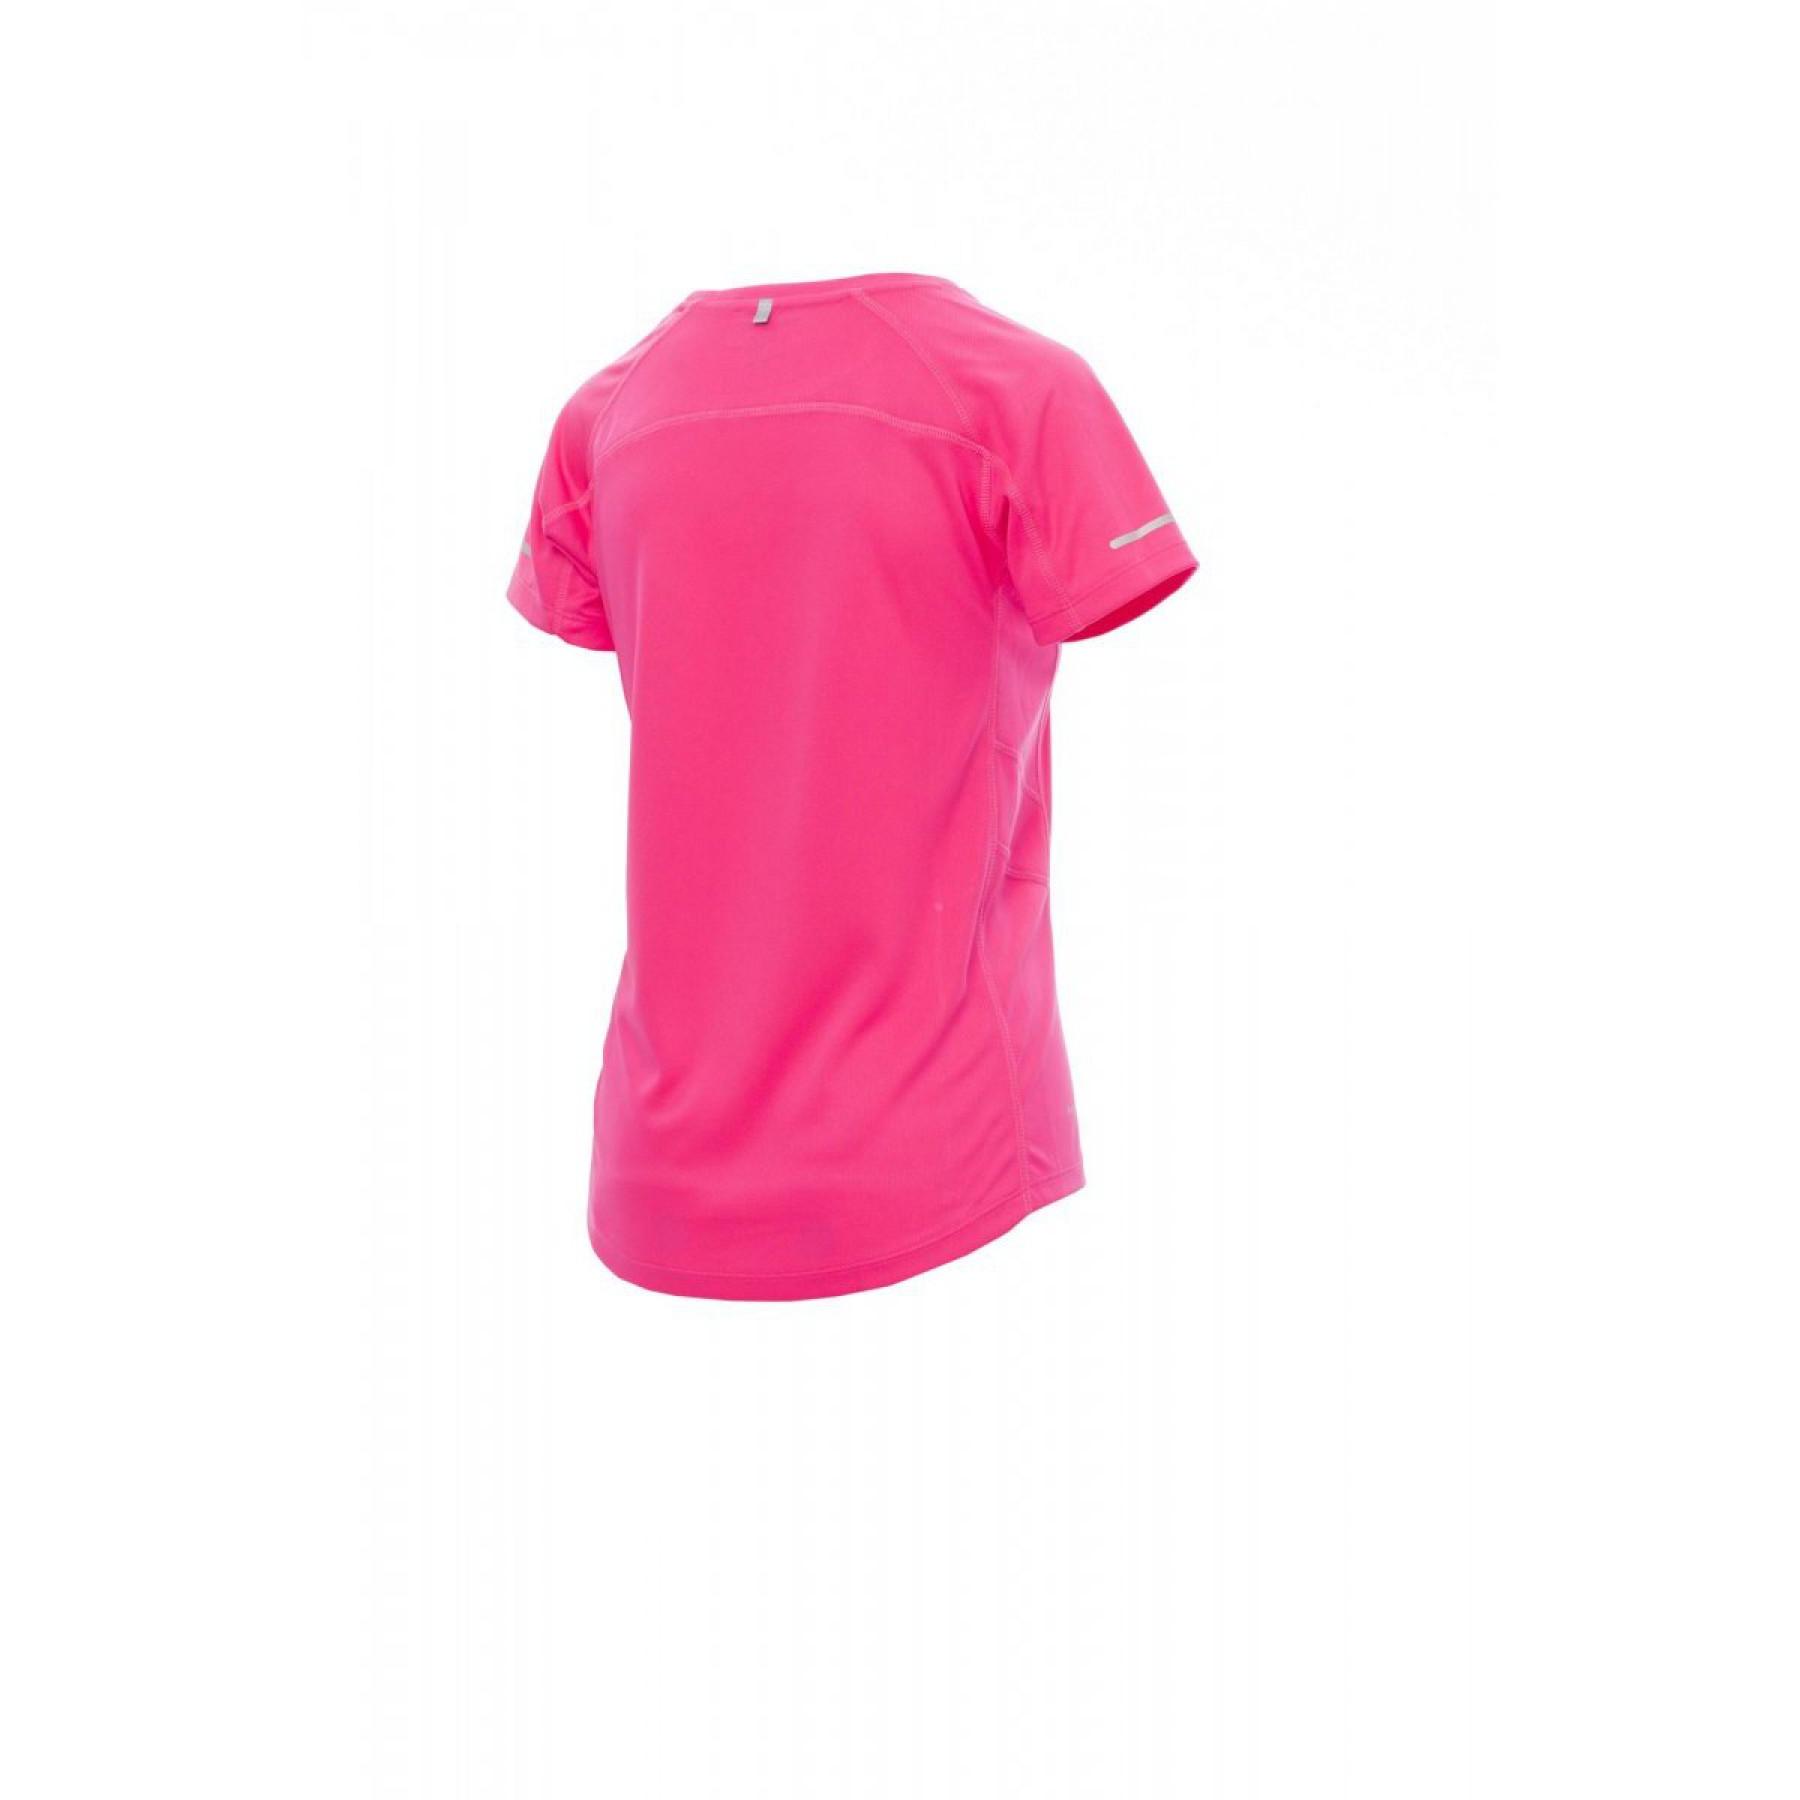 Women's Payper Running T-shirt